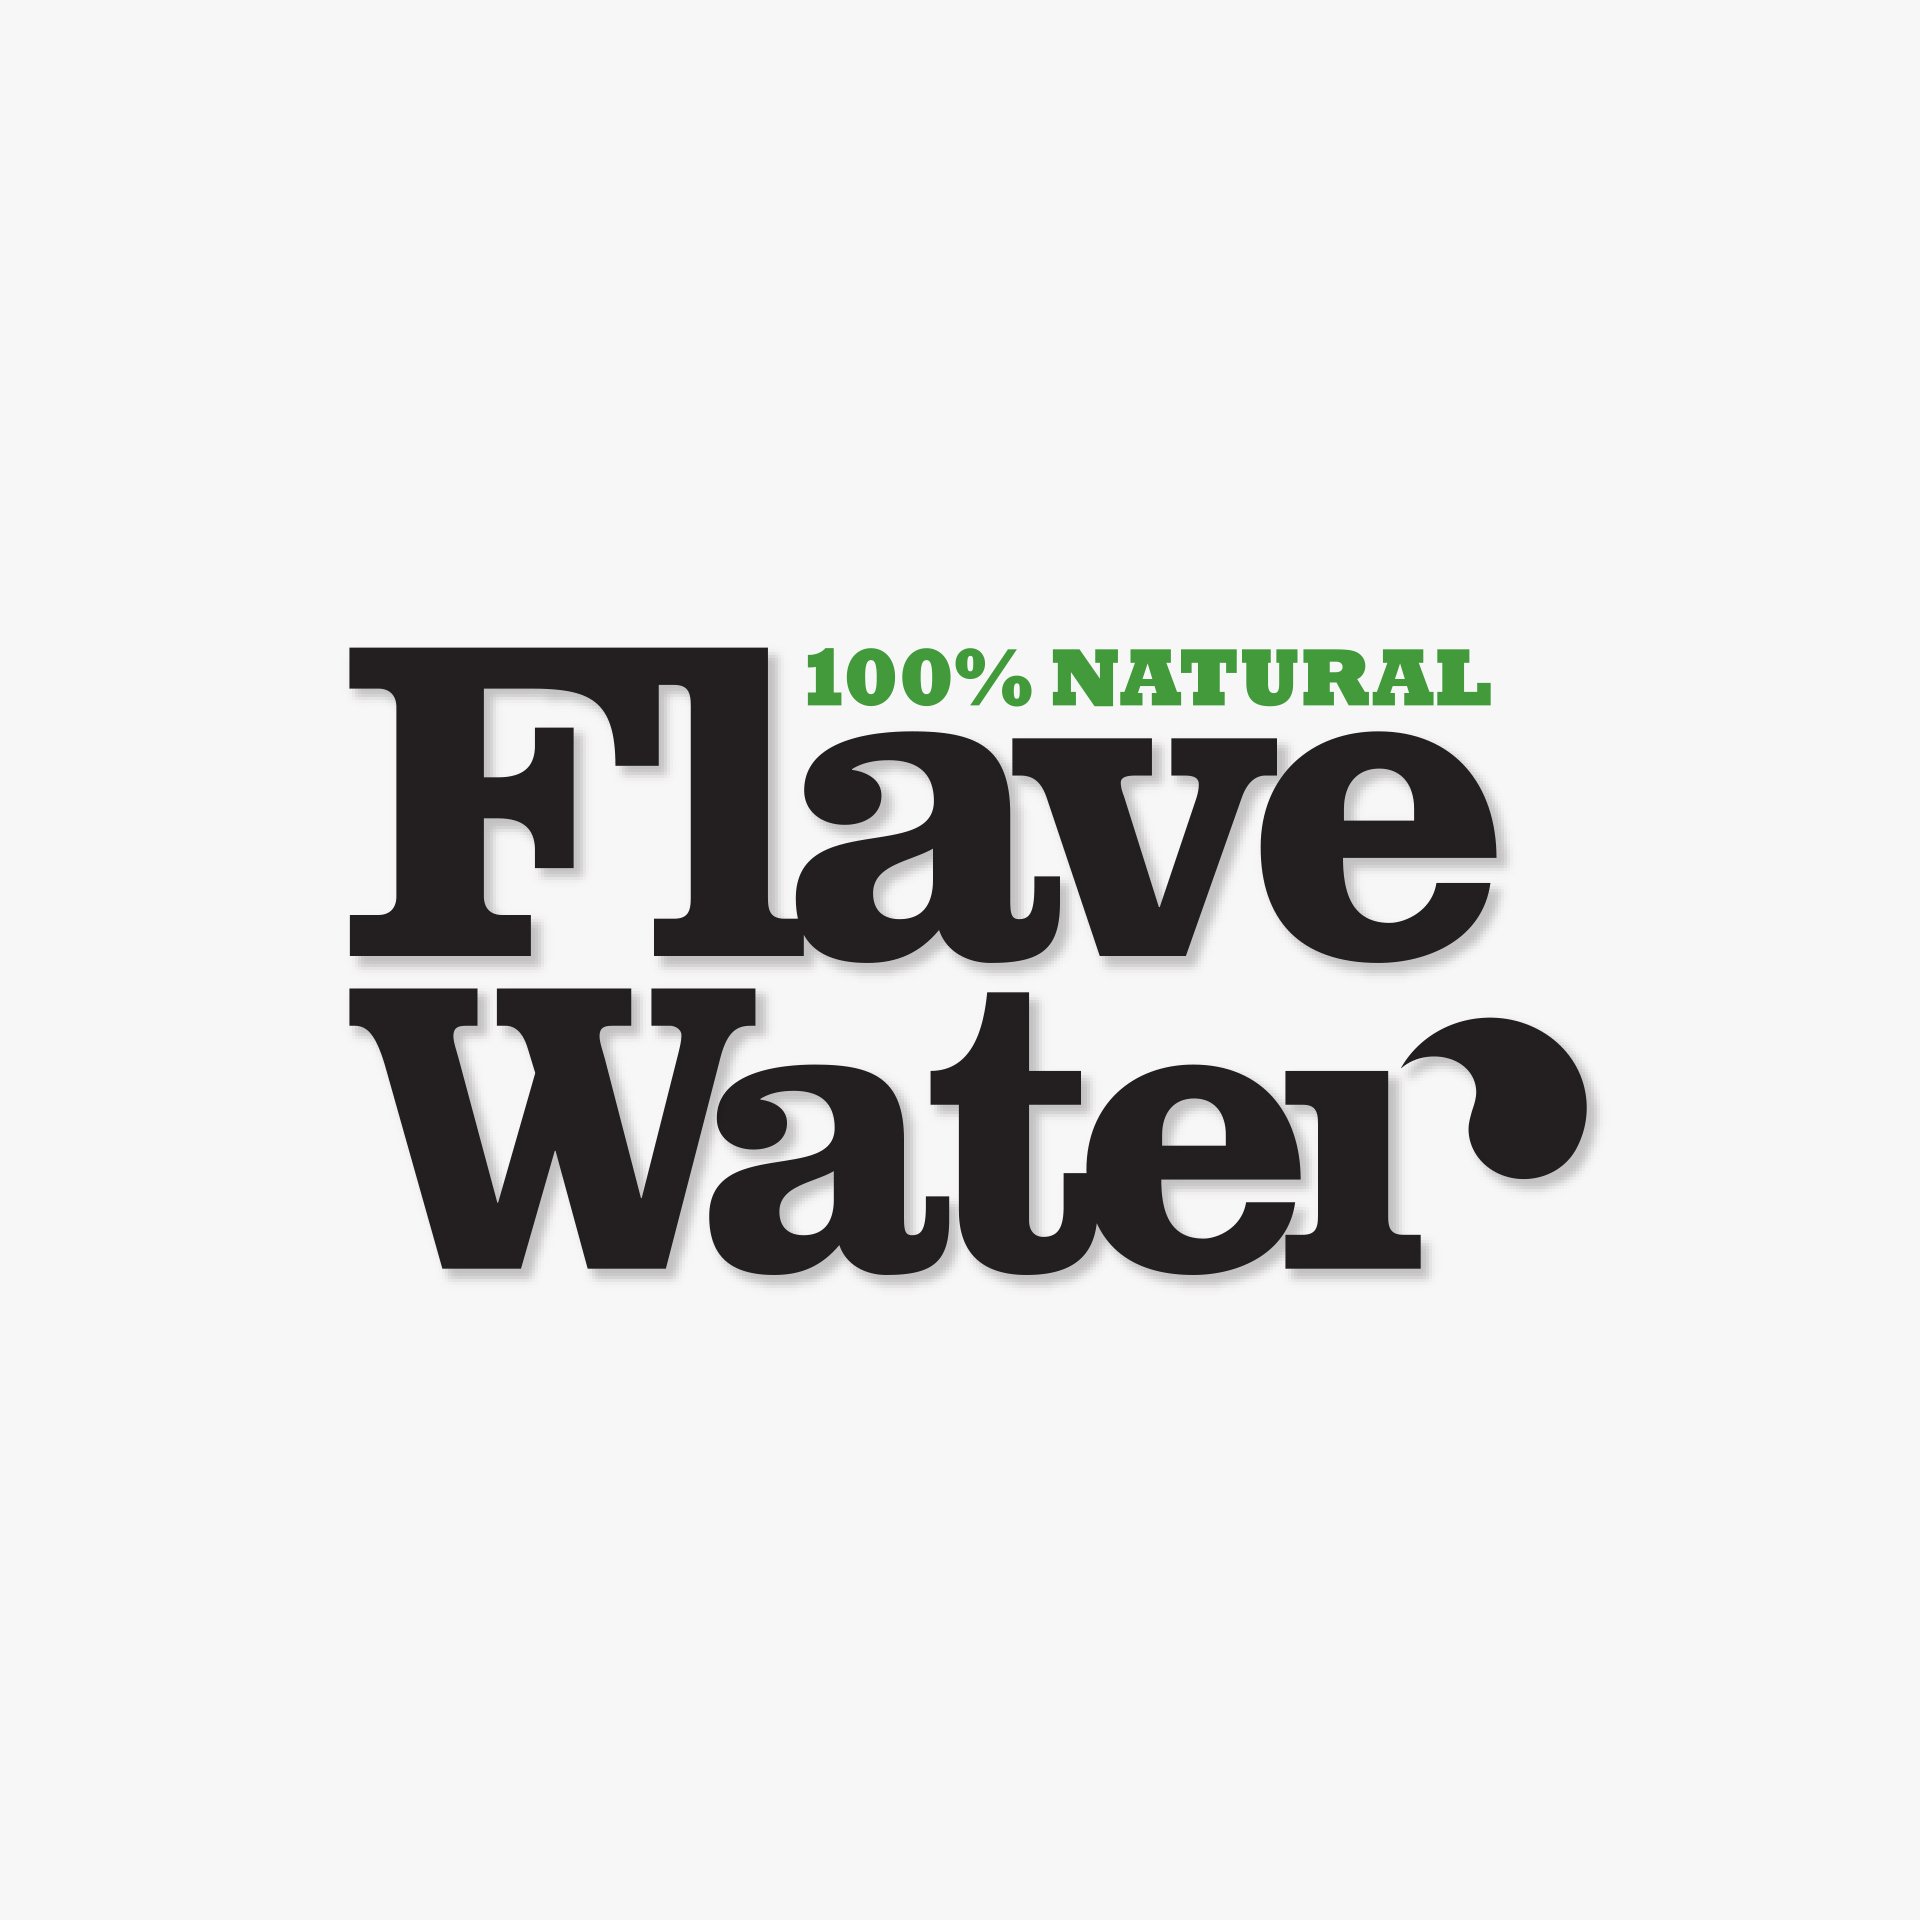 FlaveWater bottled water identity logo